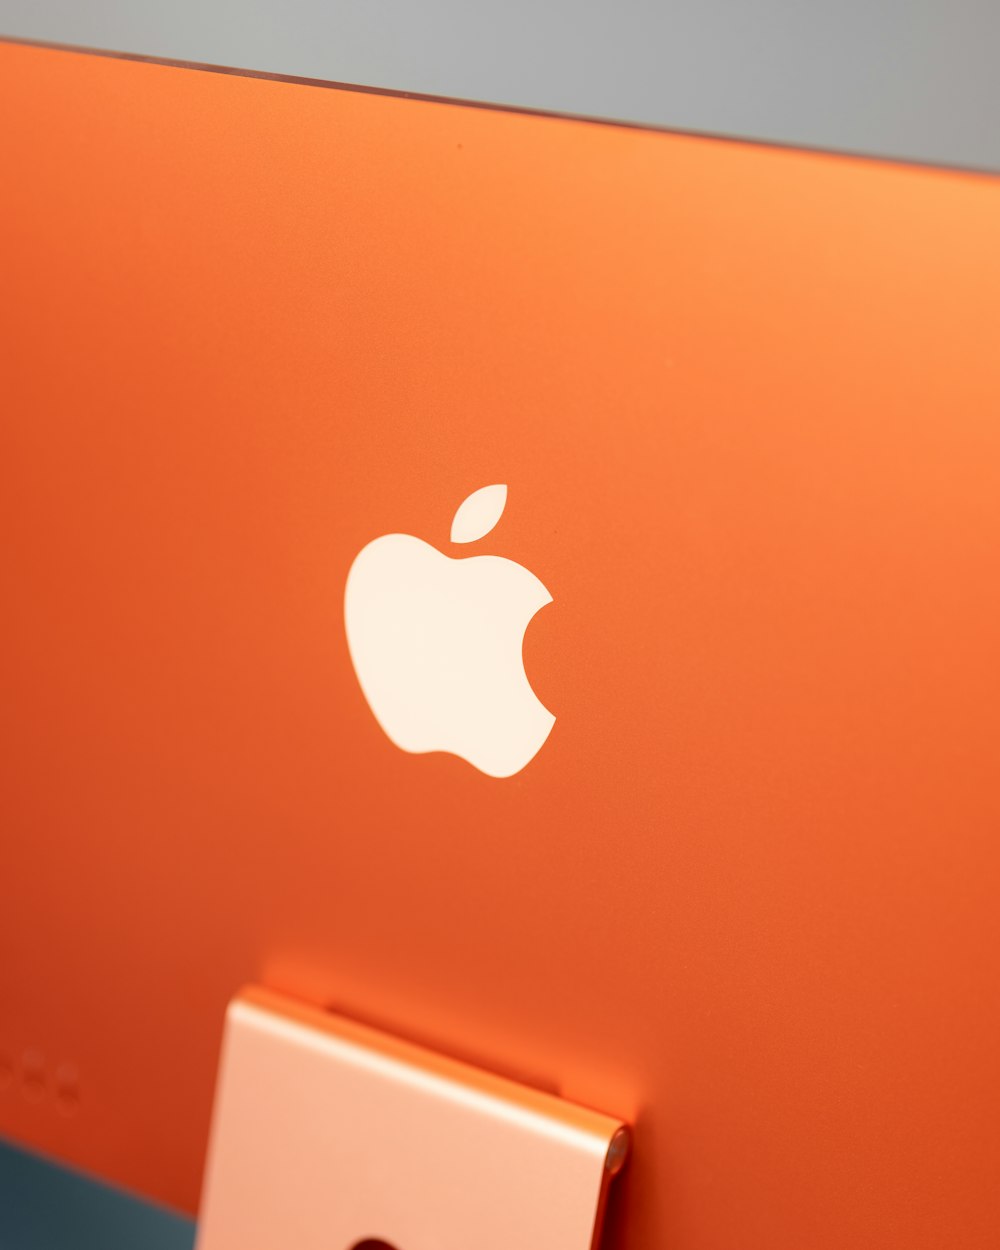 a close up of an orange apple computer